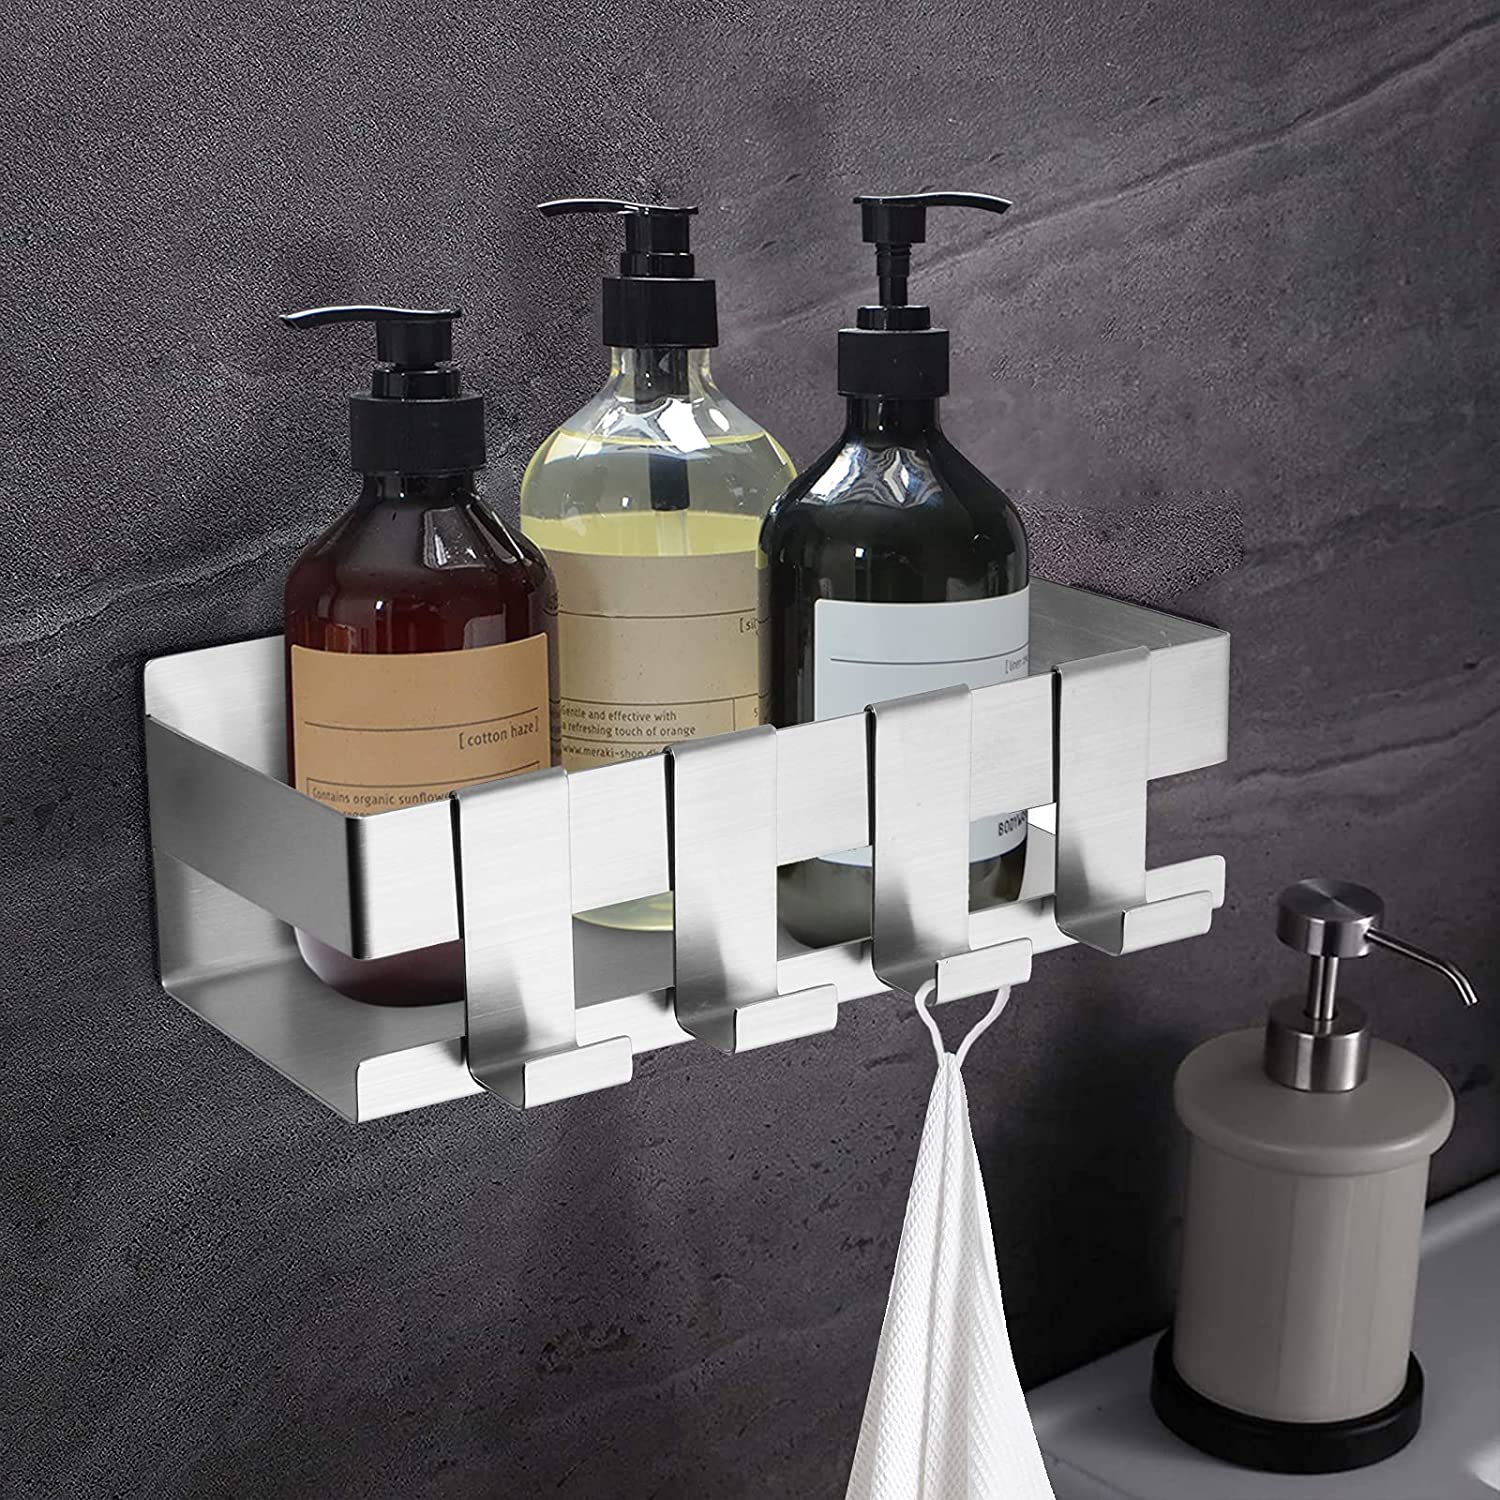 Homgen Shower Shelf with No Drilling Self Adhesive Shower Shelf